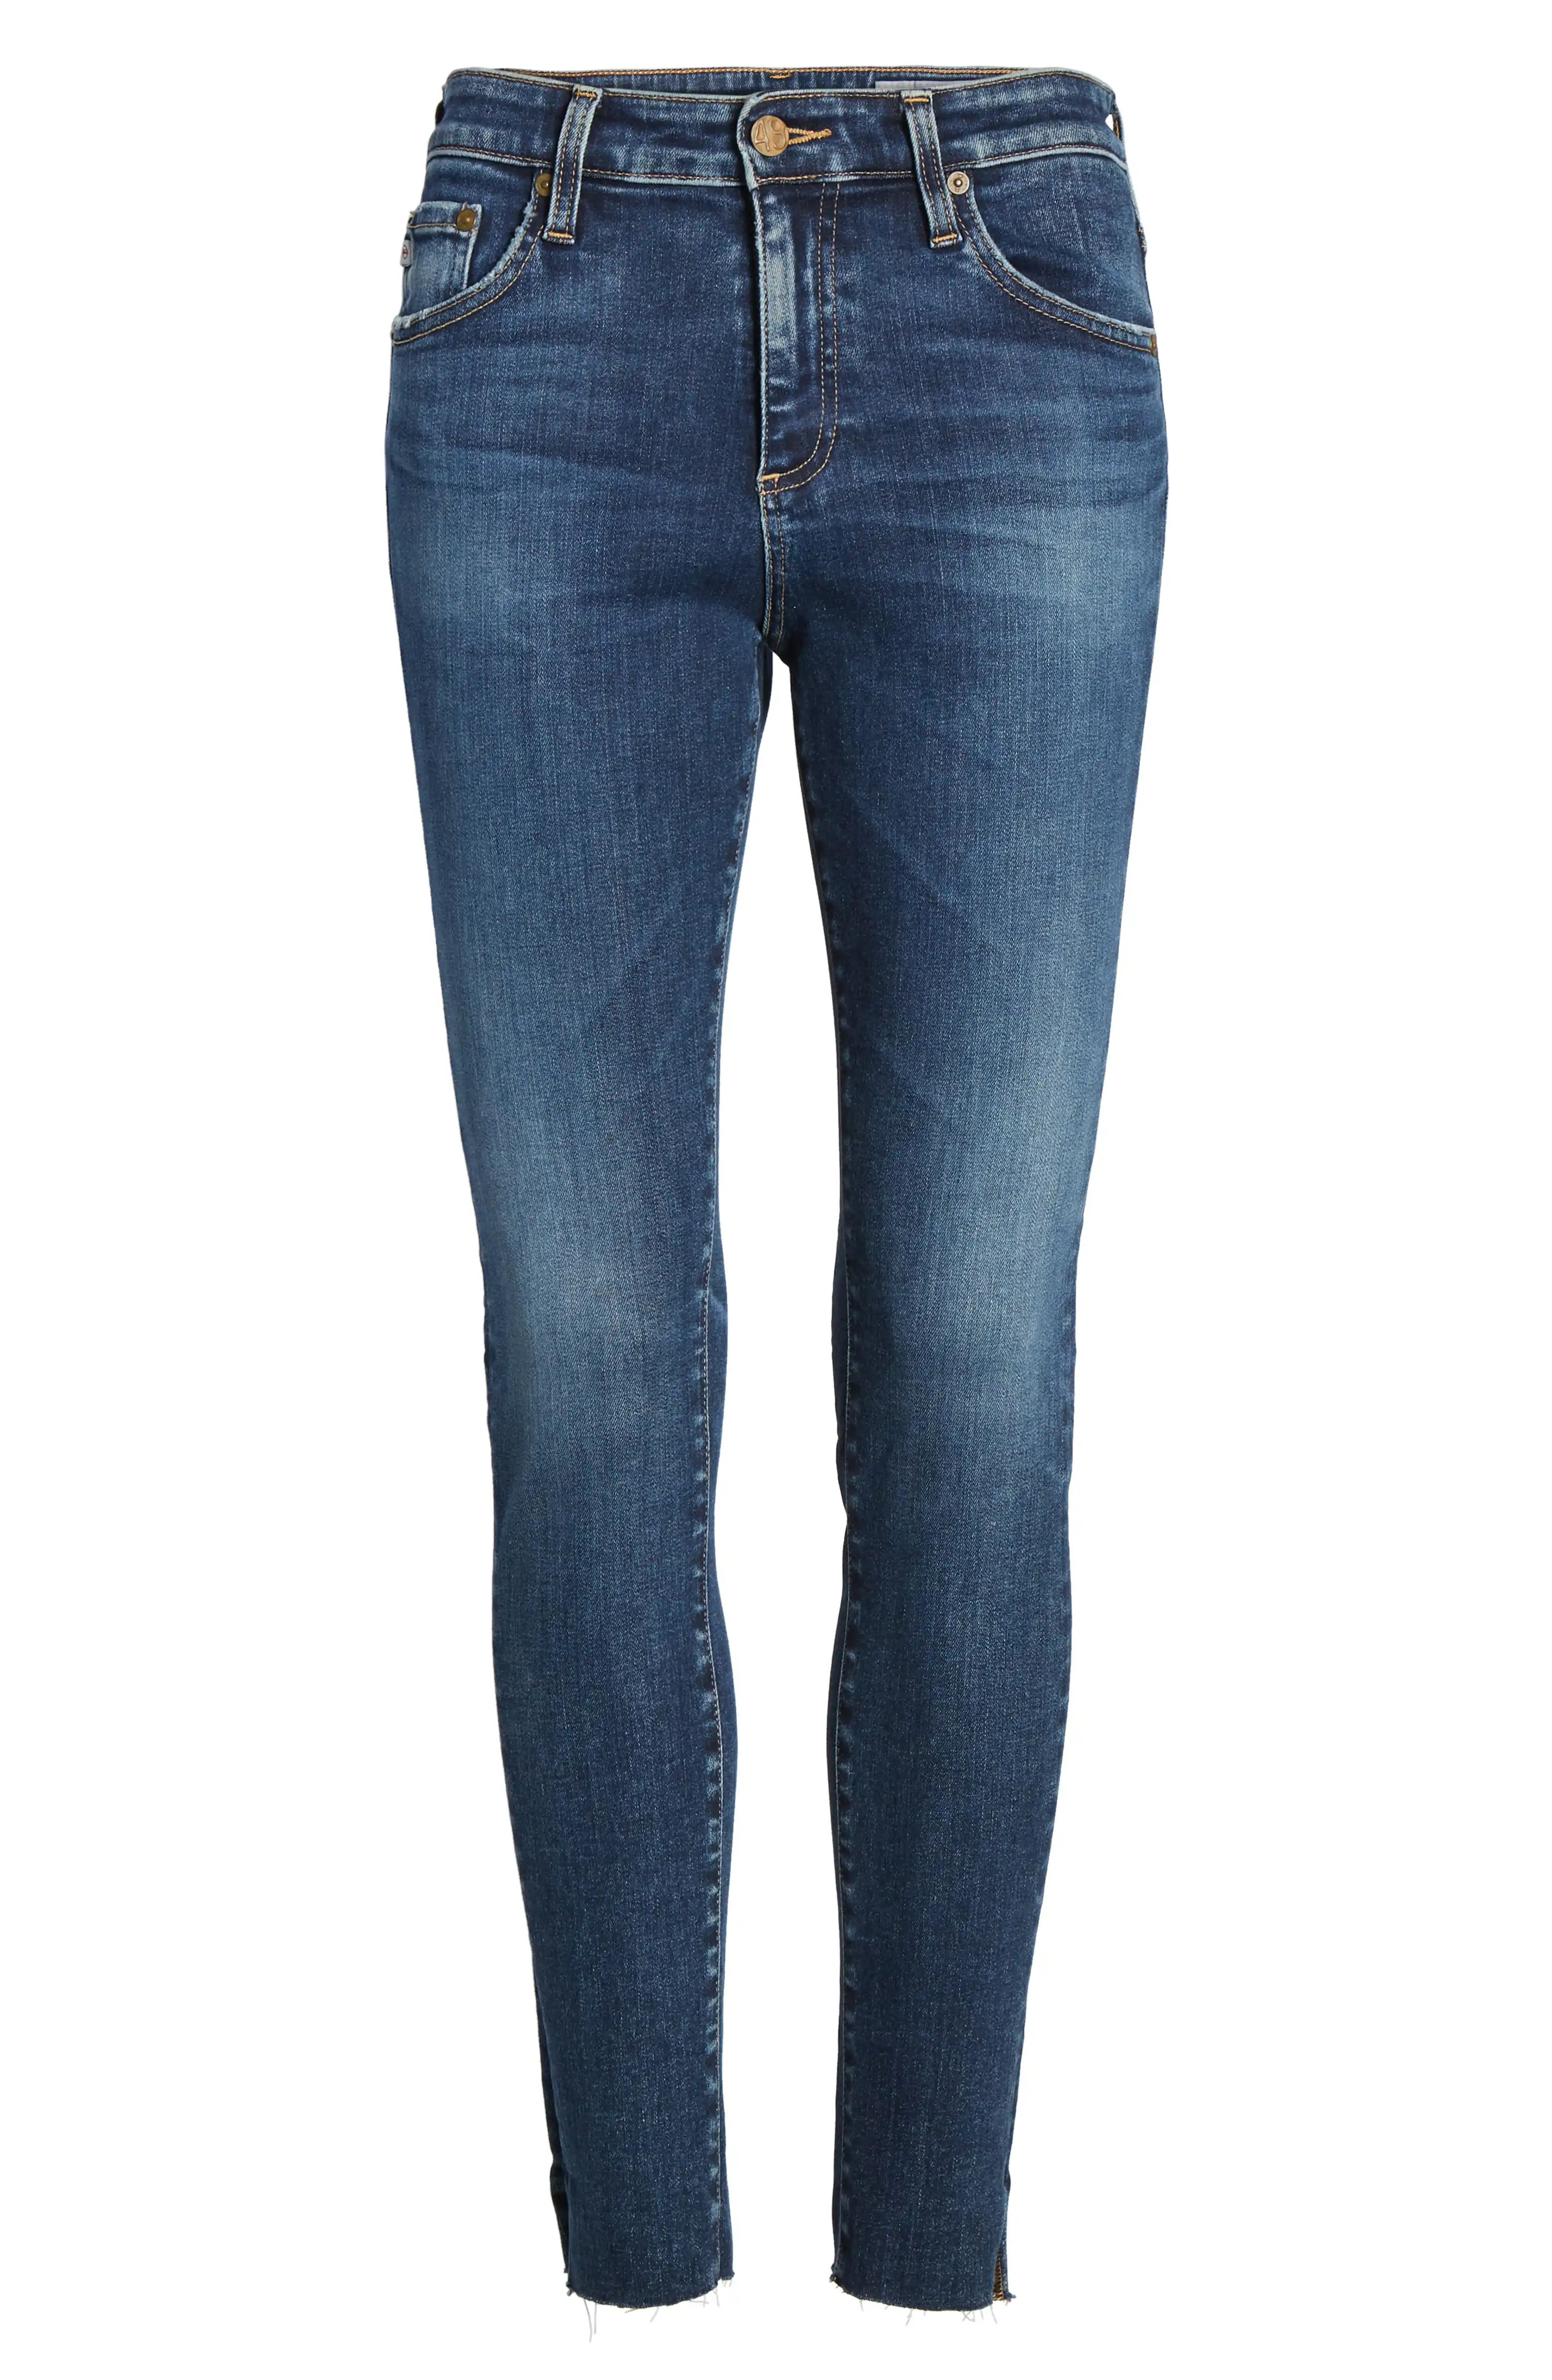 The Farrah High Waist Ankle Skinny Jeans | Nordstrom